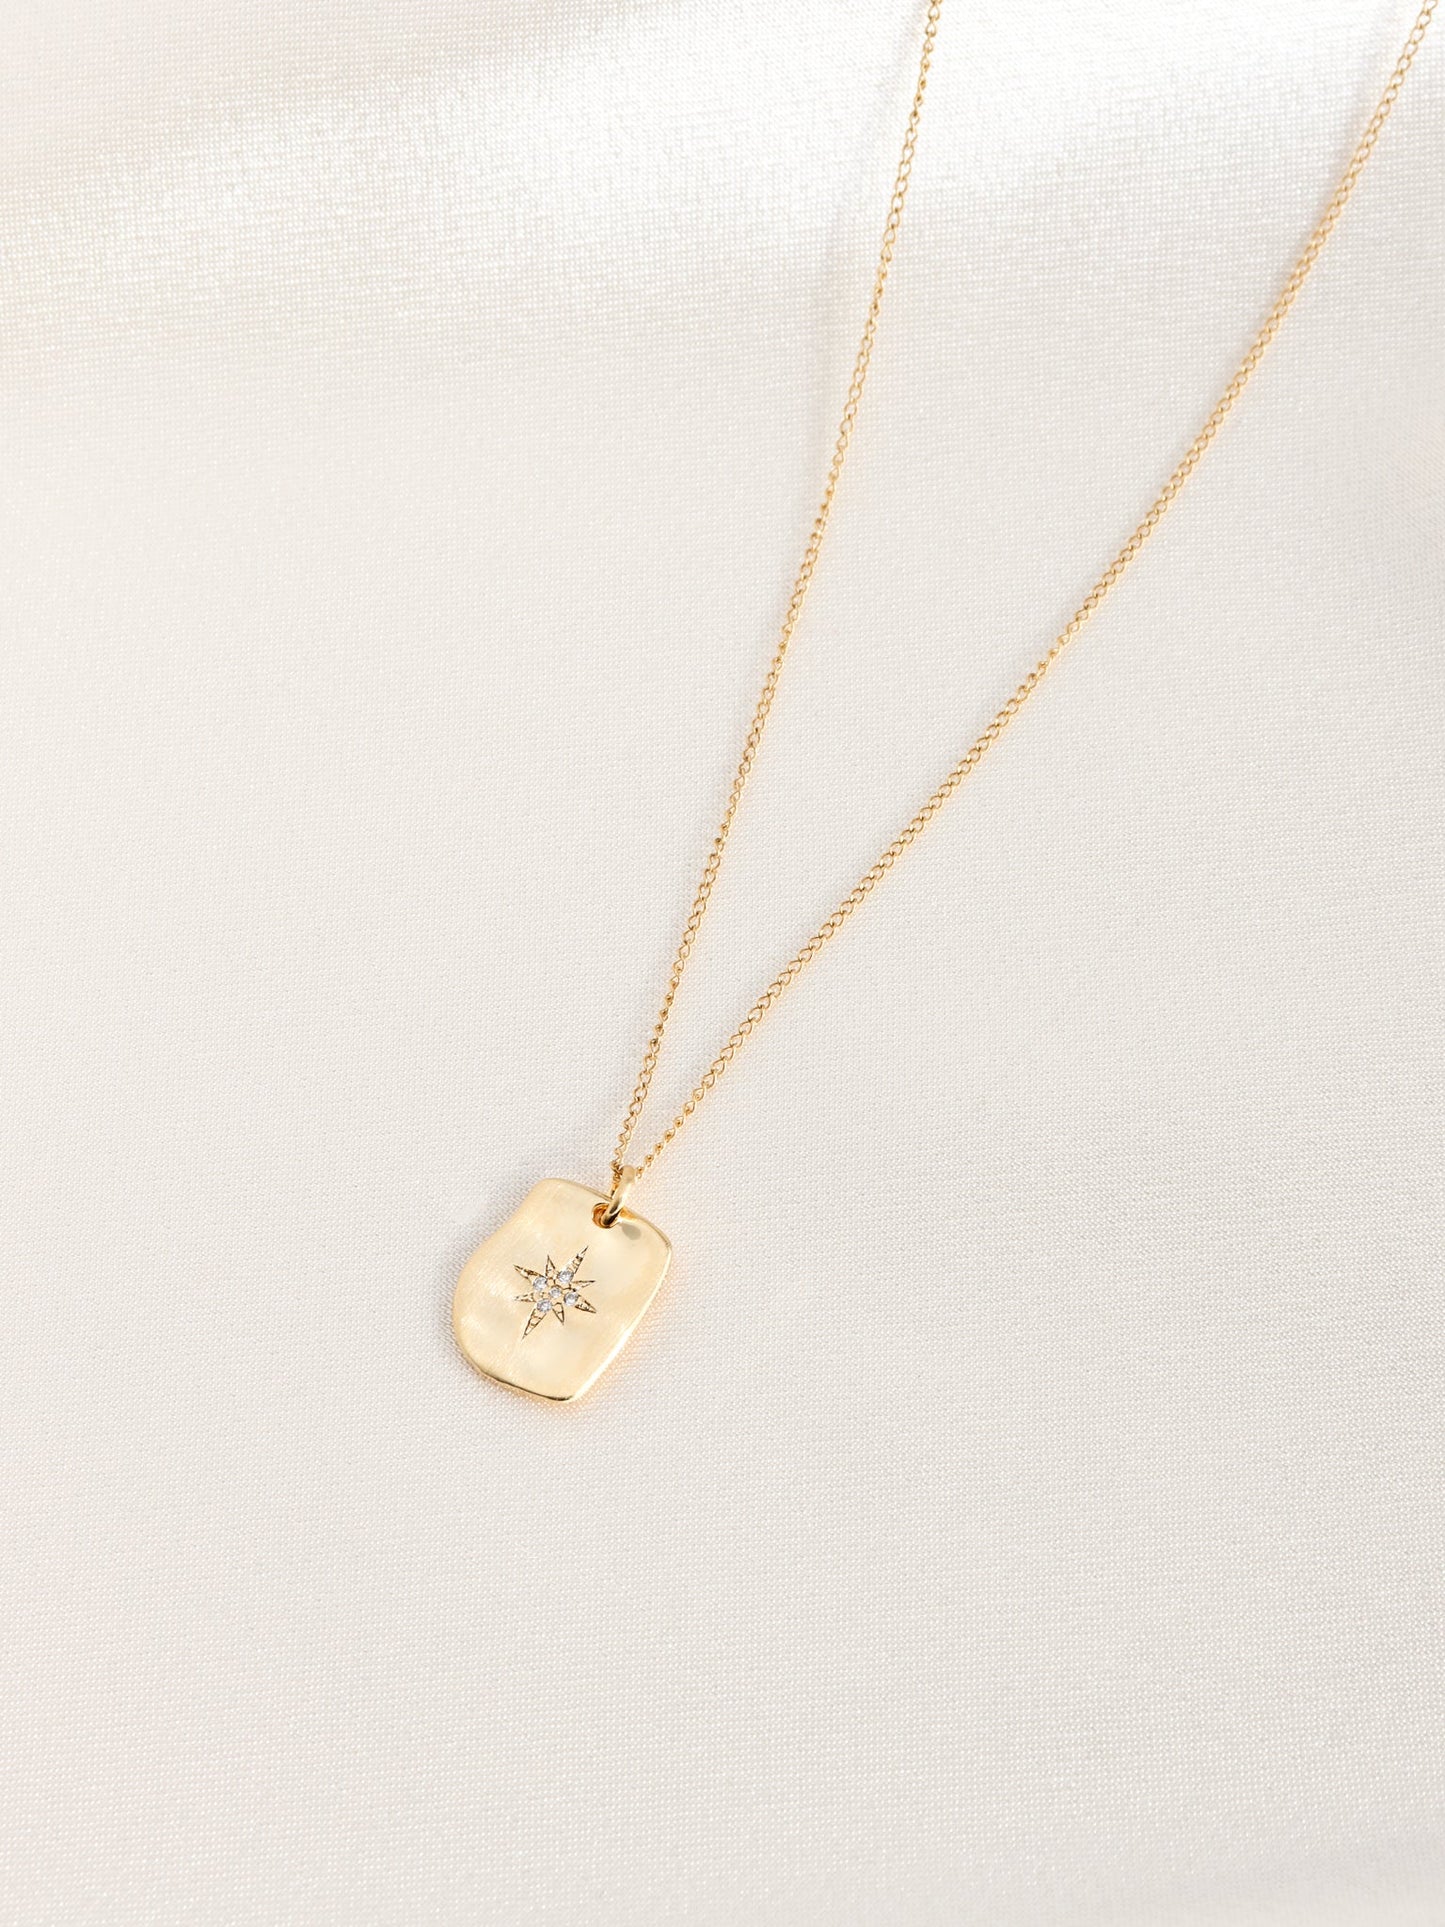 Northern Star Tag Necklace - Gold Filled - Gemlet